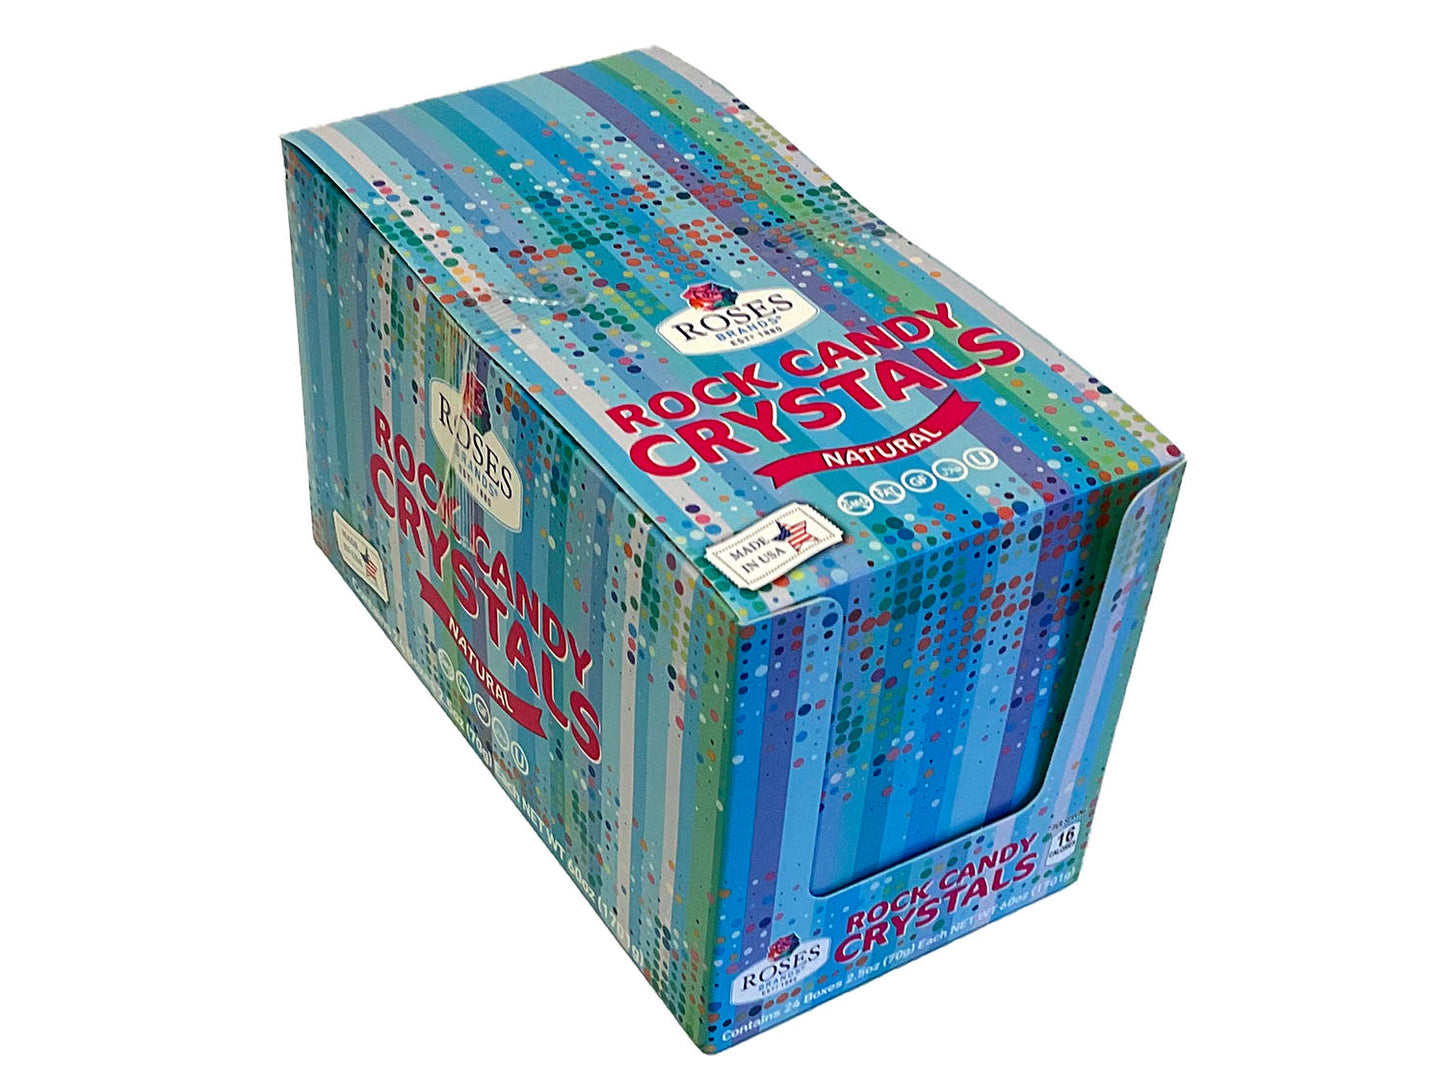 Rock Candy Crystals - 2.5 oz box - box of 24